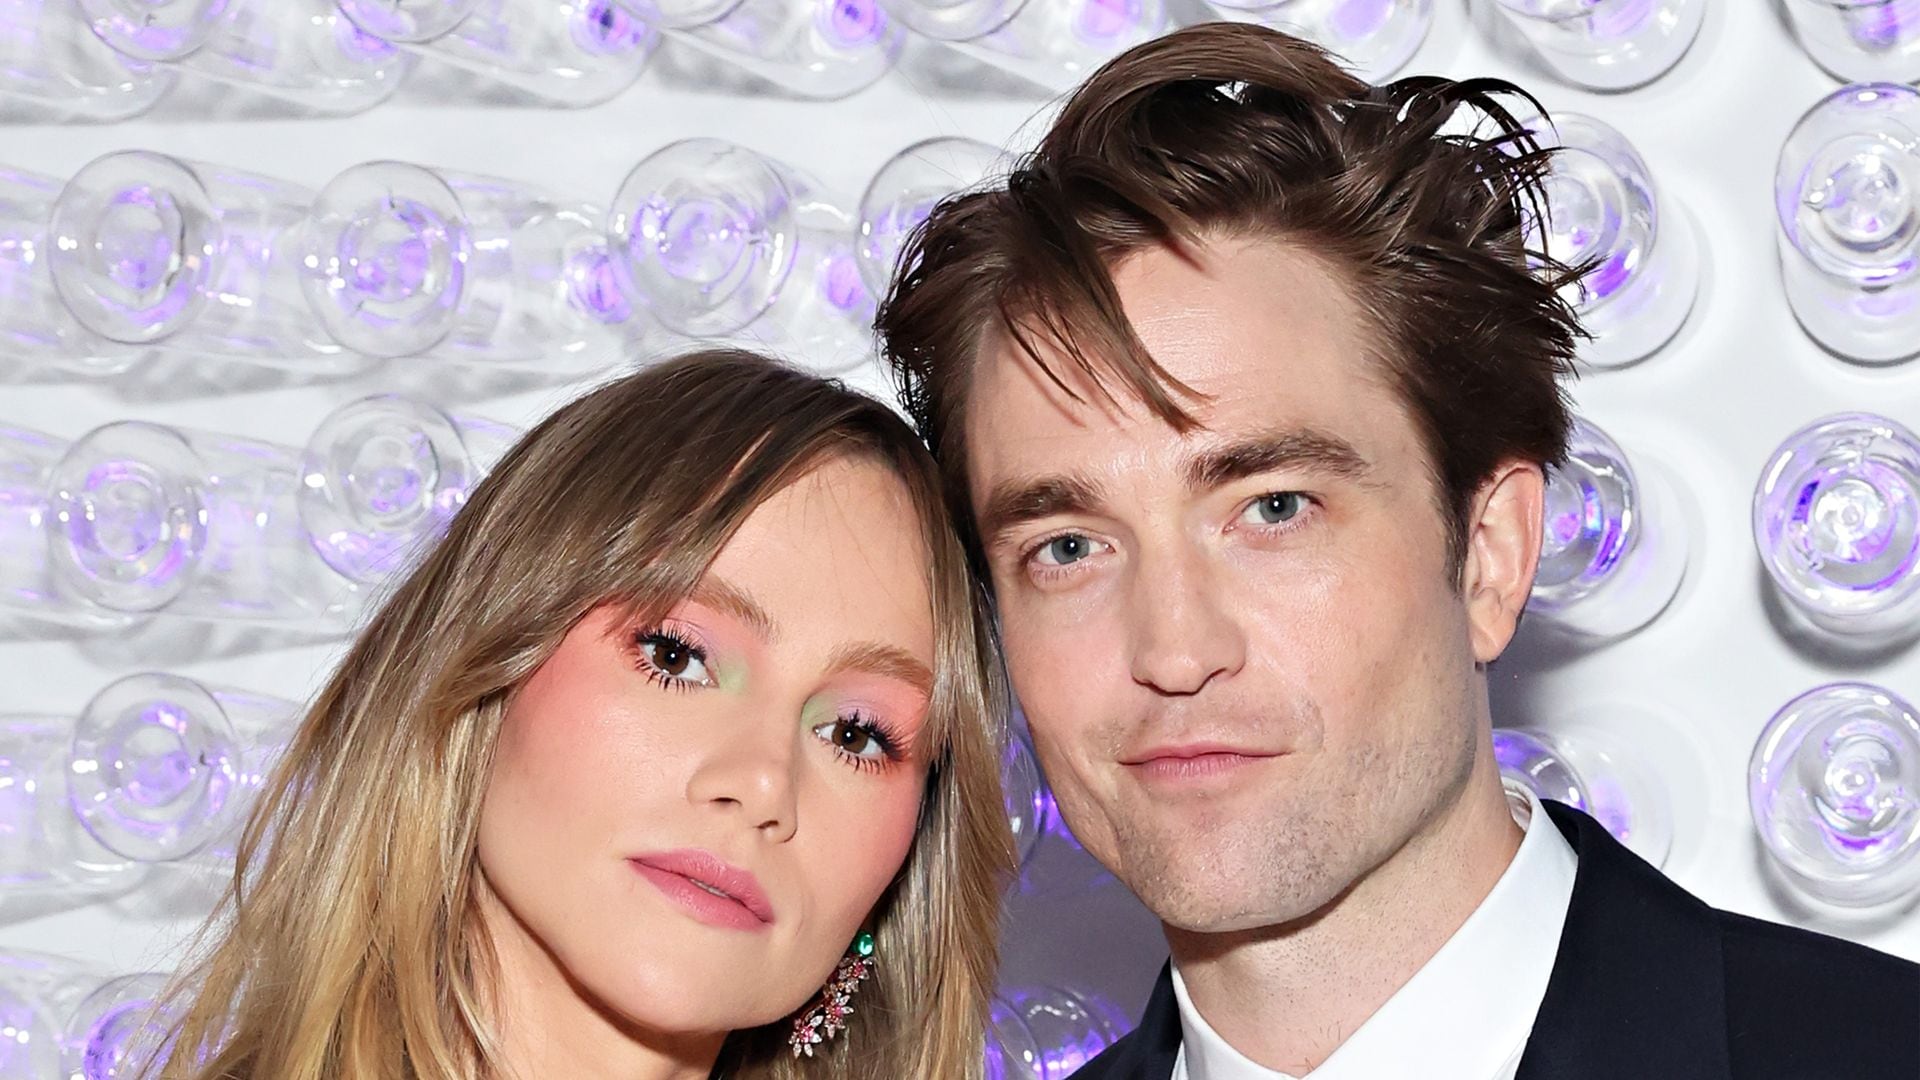 Suki Waterhouse shares rare insight into Robert Pattinson as a father